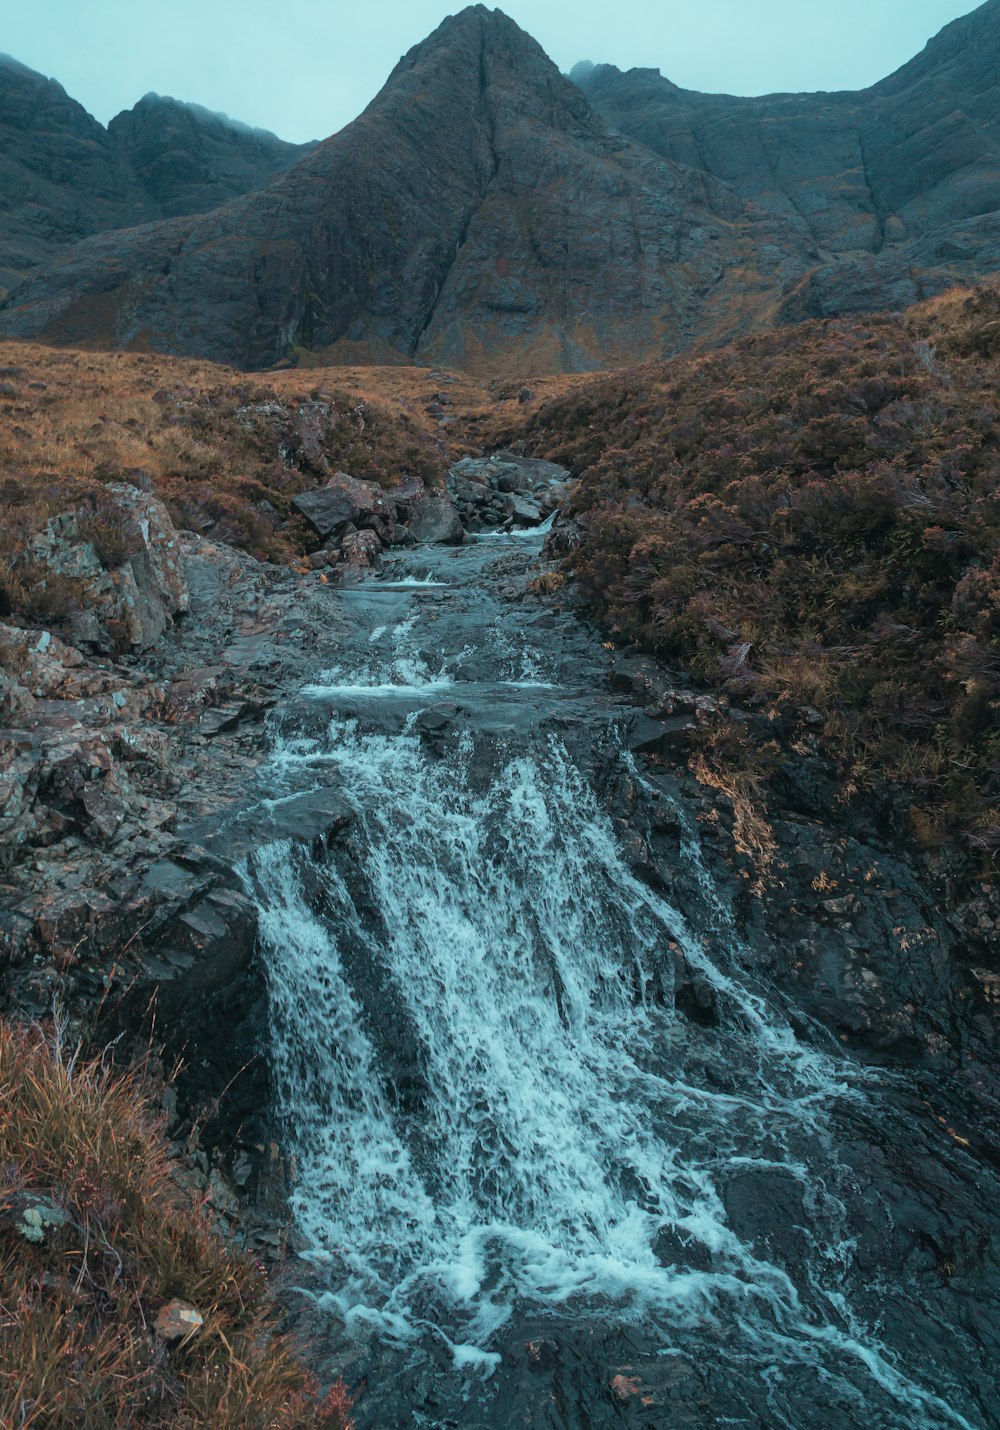 water falls on rocky mountain